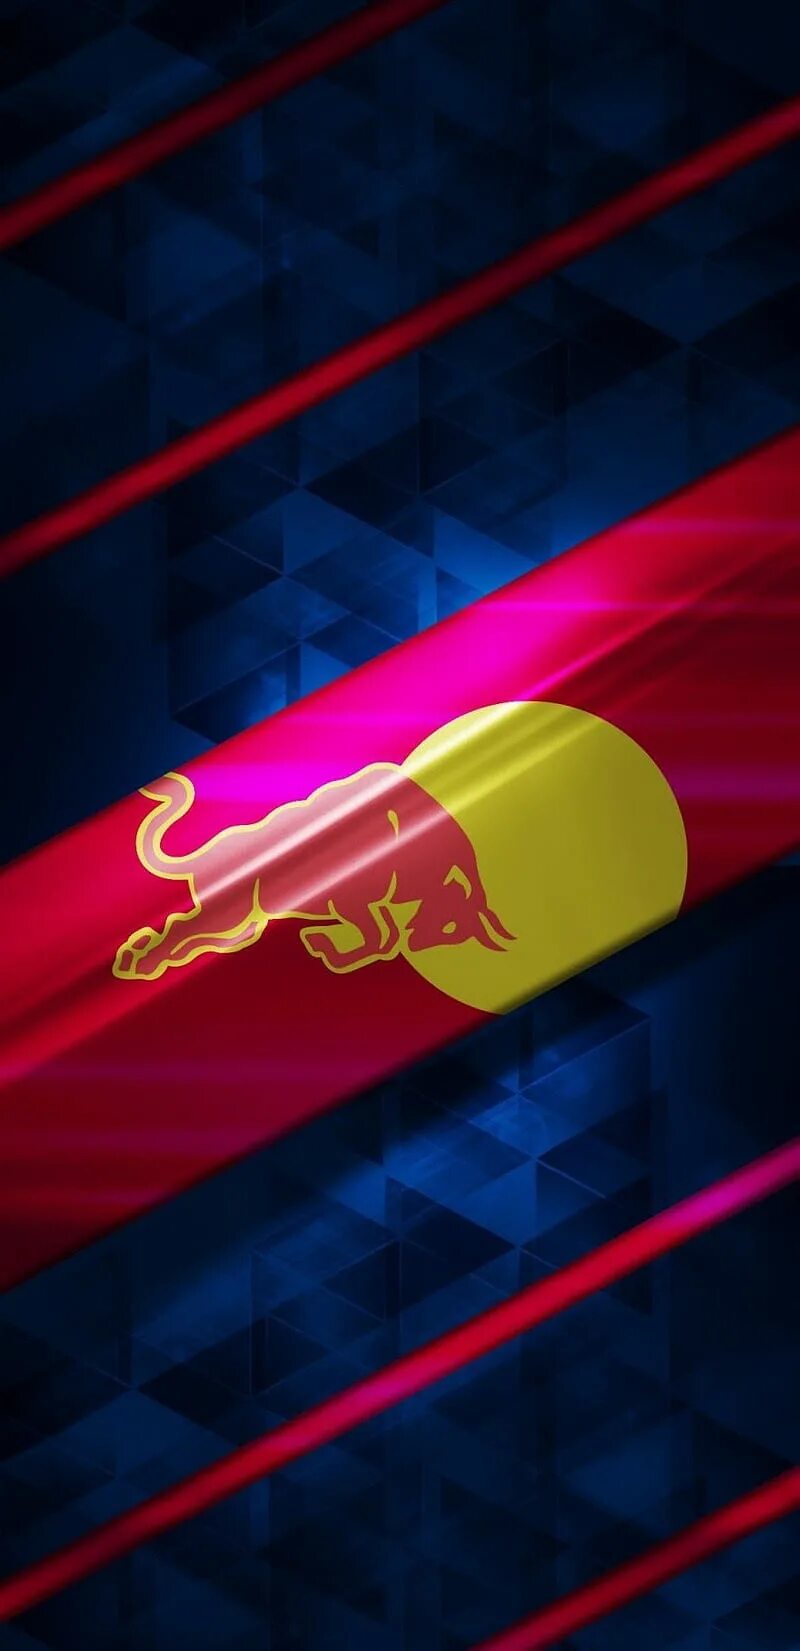 Red bull mobile. Red bull Racing logo 2022. Обои Red bull Racing iphone. F1 логотип ред Булл. Red bull f1 logo 2022.